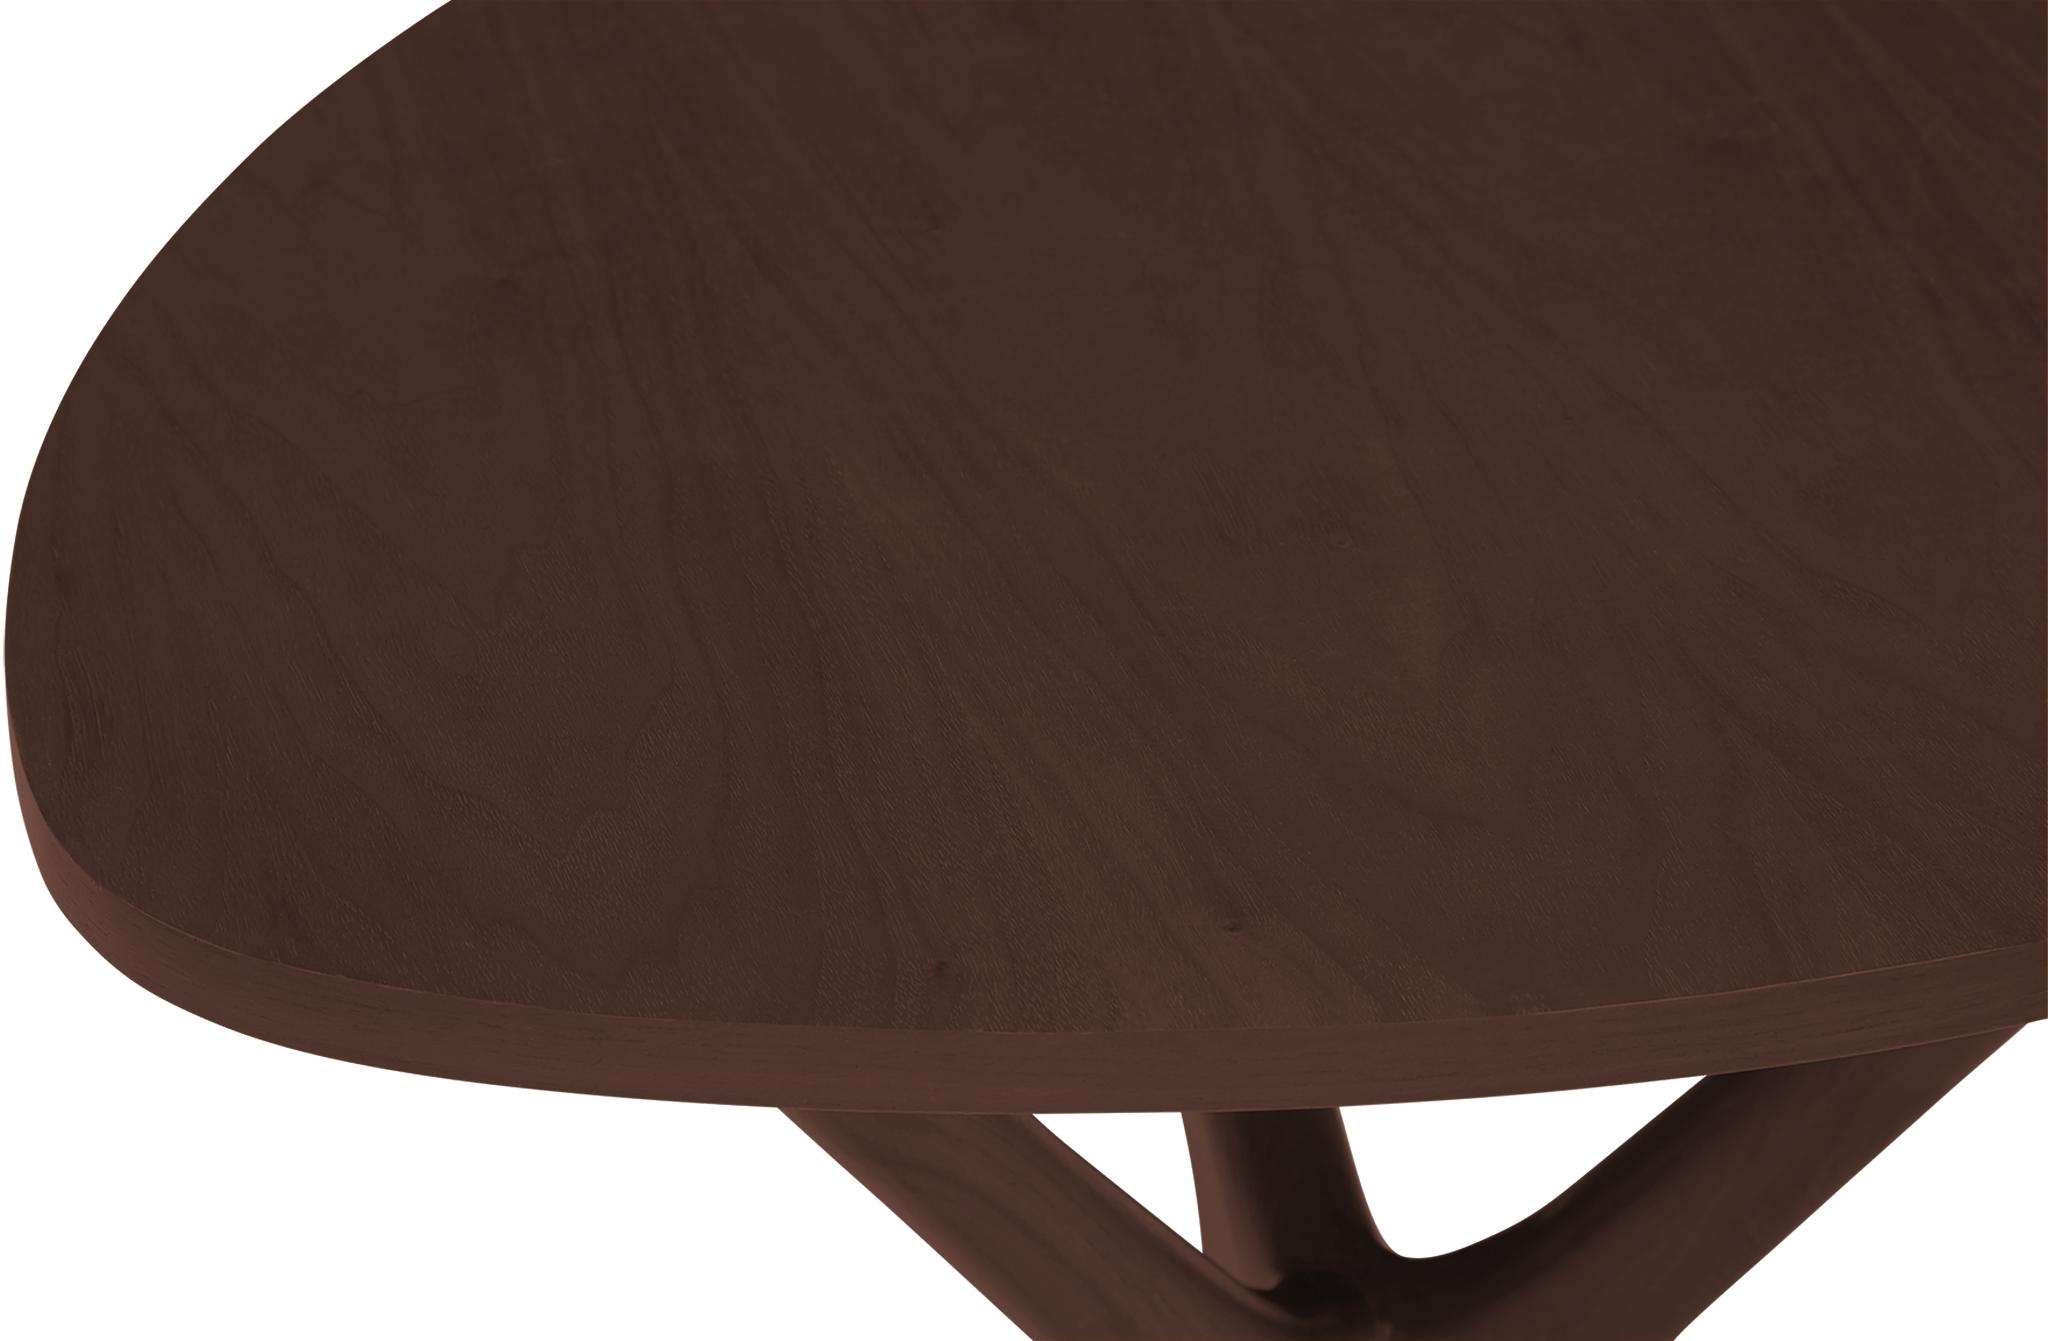 Tolson Mid Century Modern (Wood Top) End Table - Walnut - Image 2